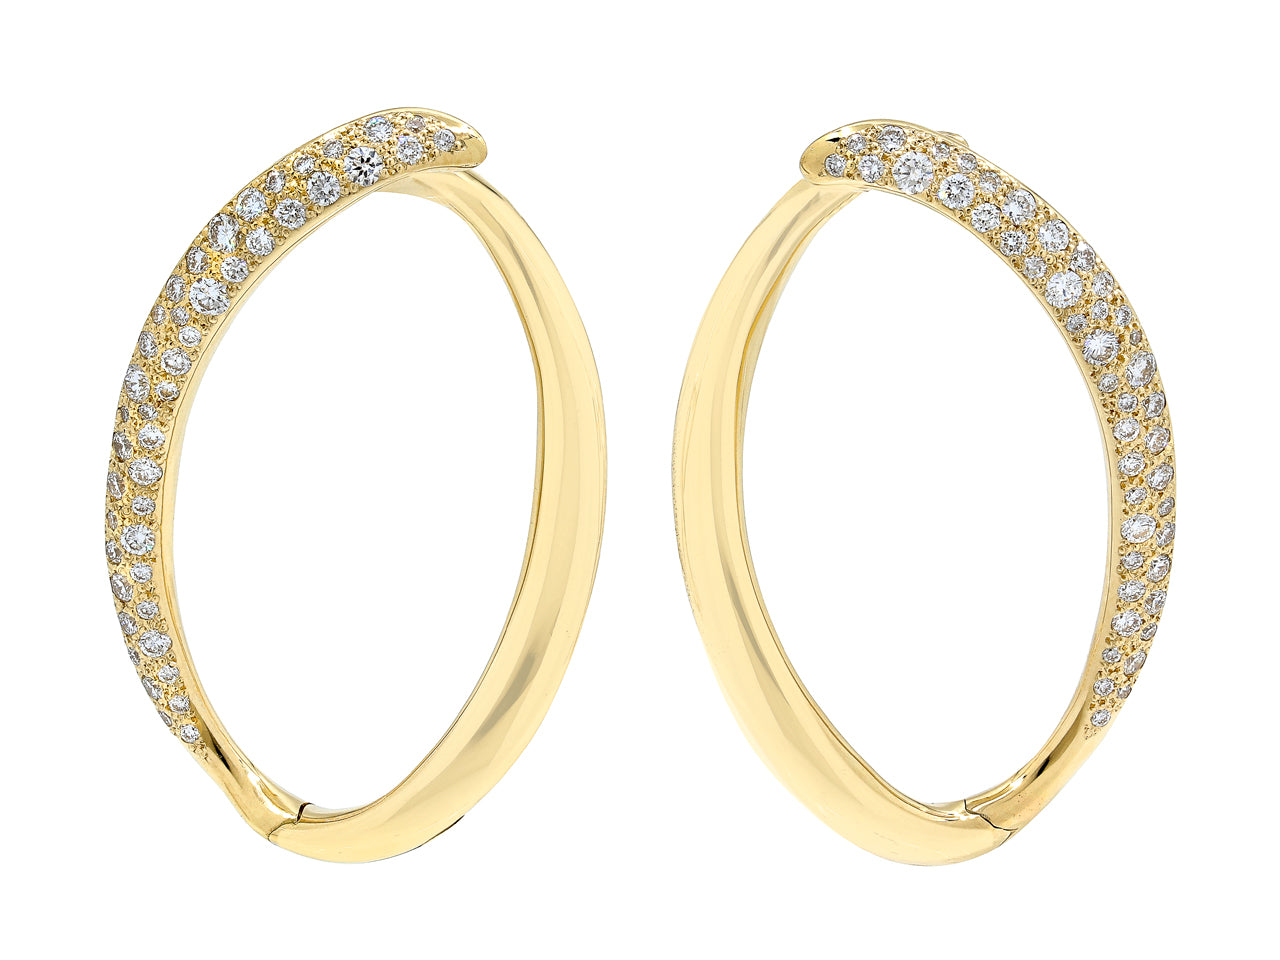 Diamond Loop Earrings in 18K Gold, by Beladora